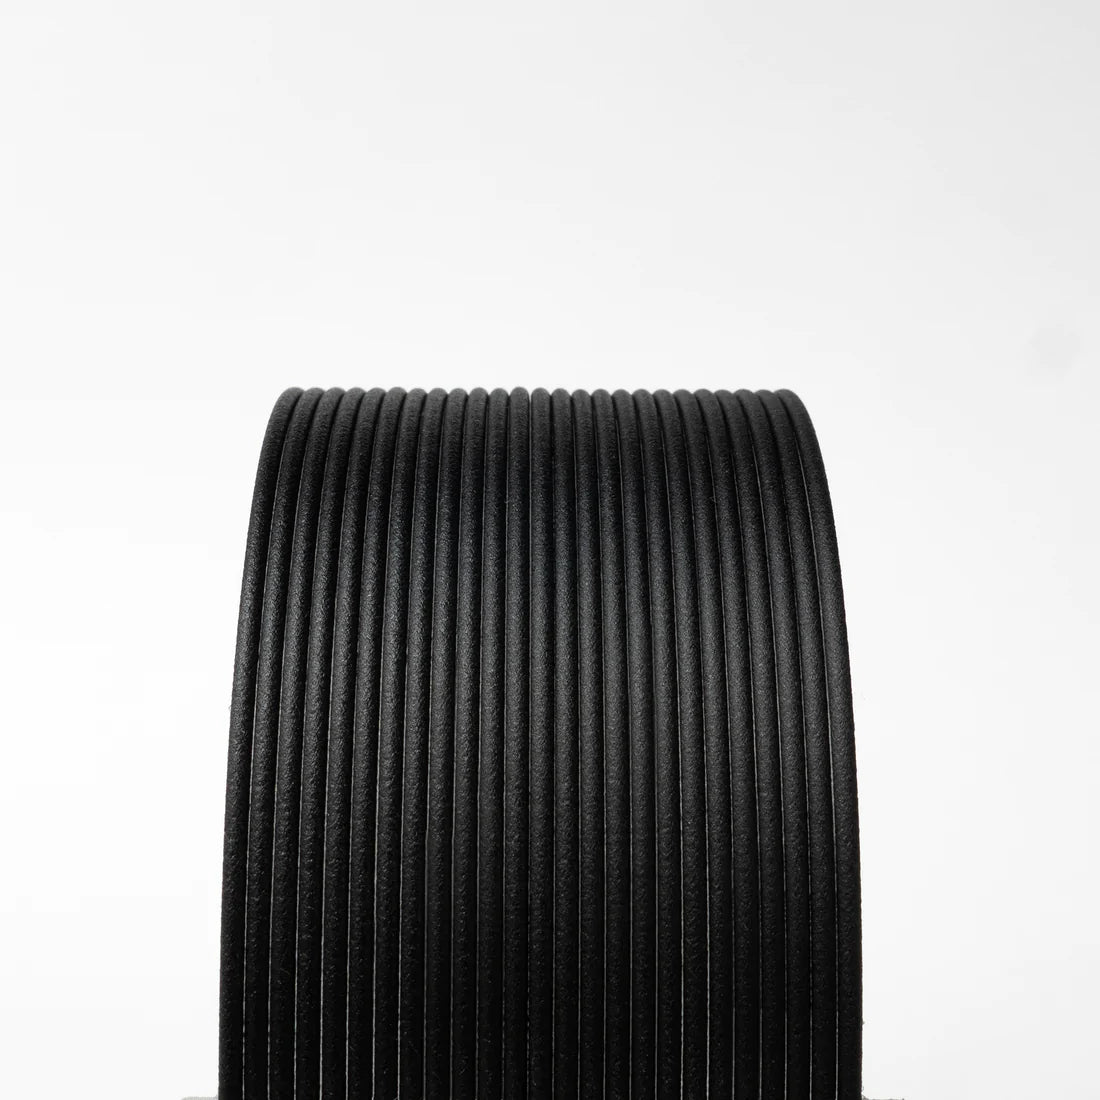 Protopasta Recycled Carbon Fiber PLA - 1.75mm (1kg)